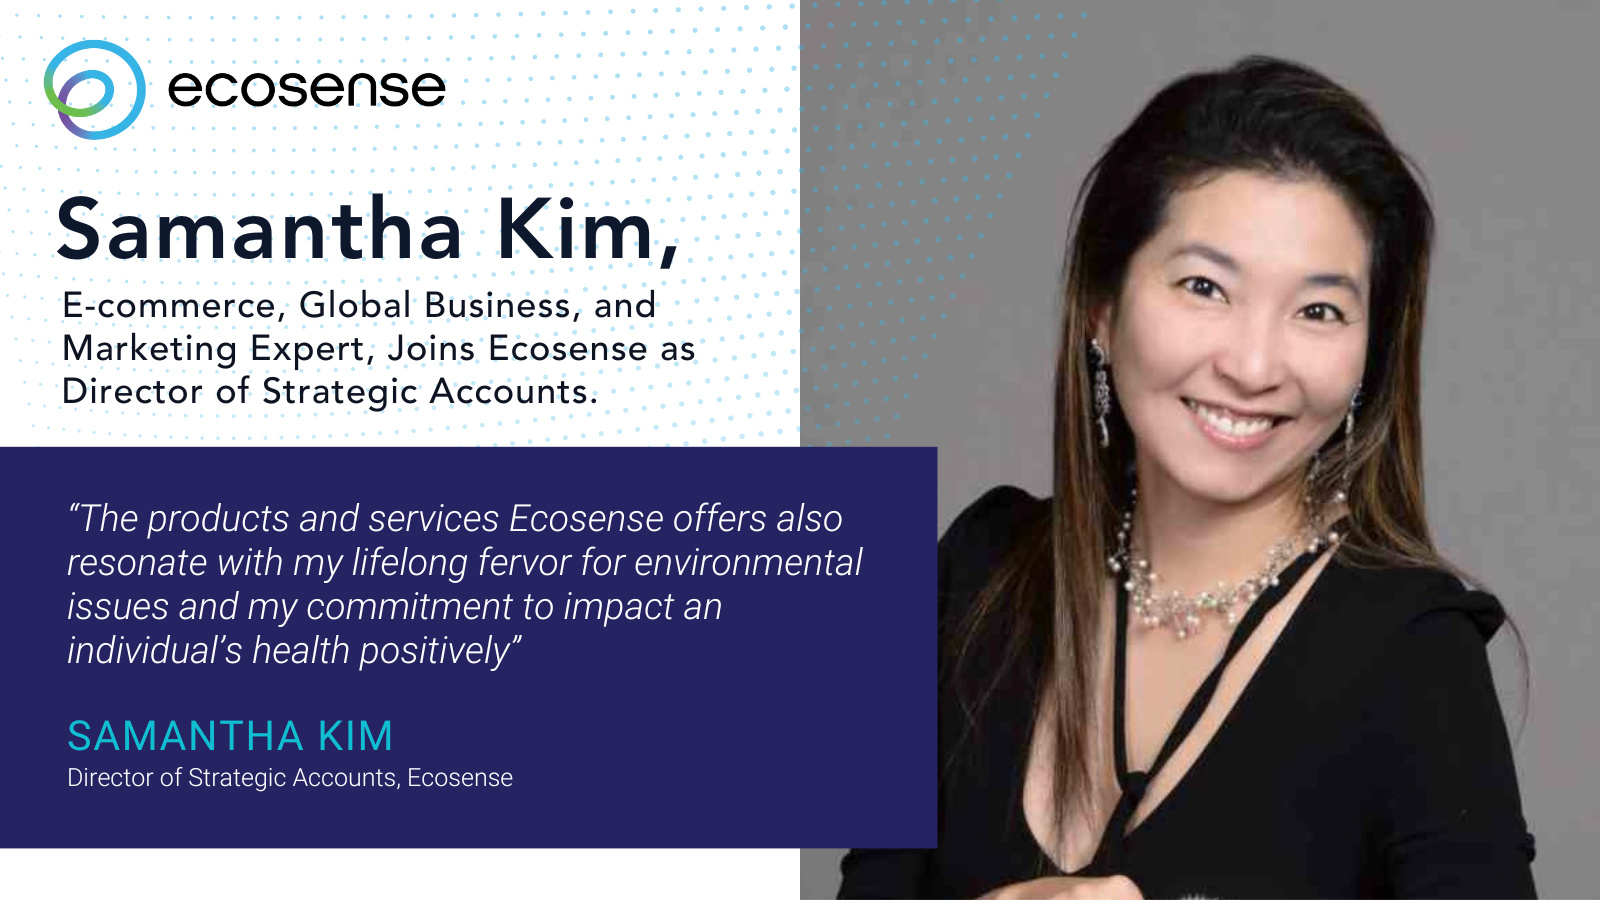 Samantha Kim, Director of Strategic Accounts, Ecosense